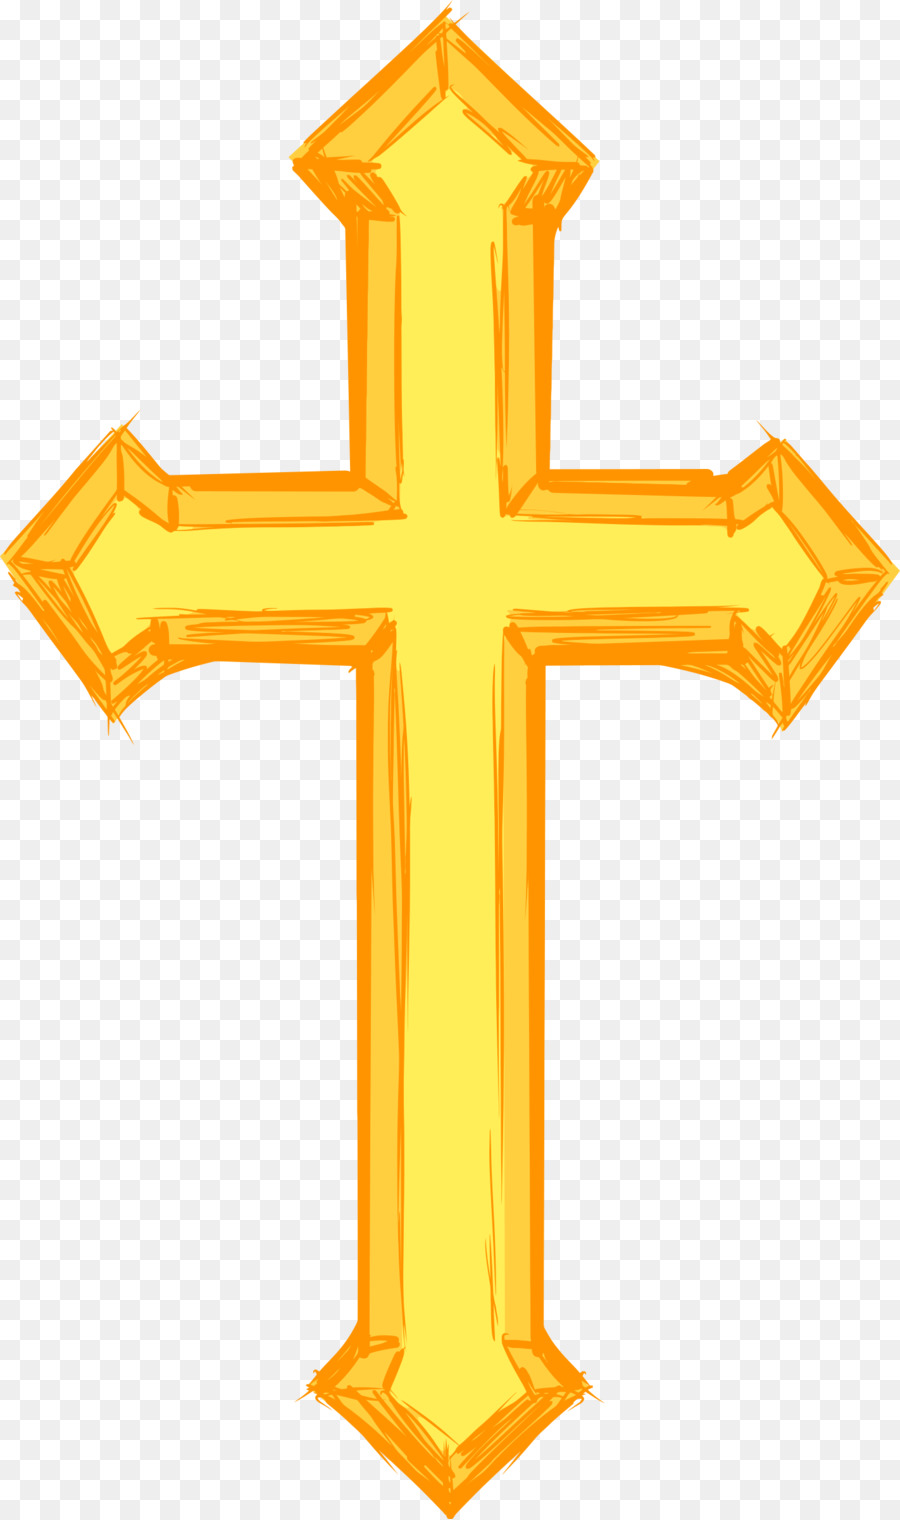 Crucifix clipart tombstone cross, Crucifix tombstone cross.